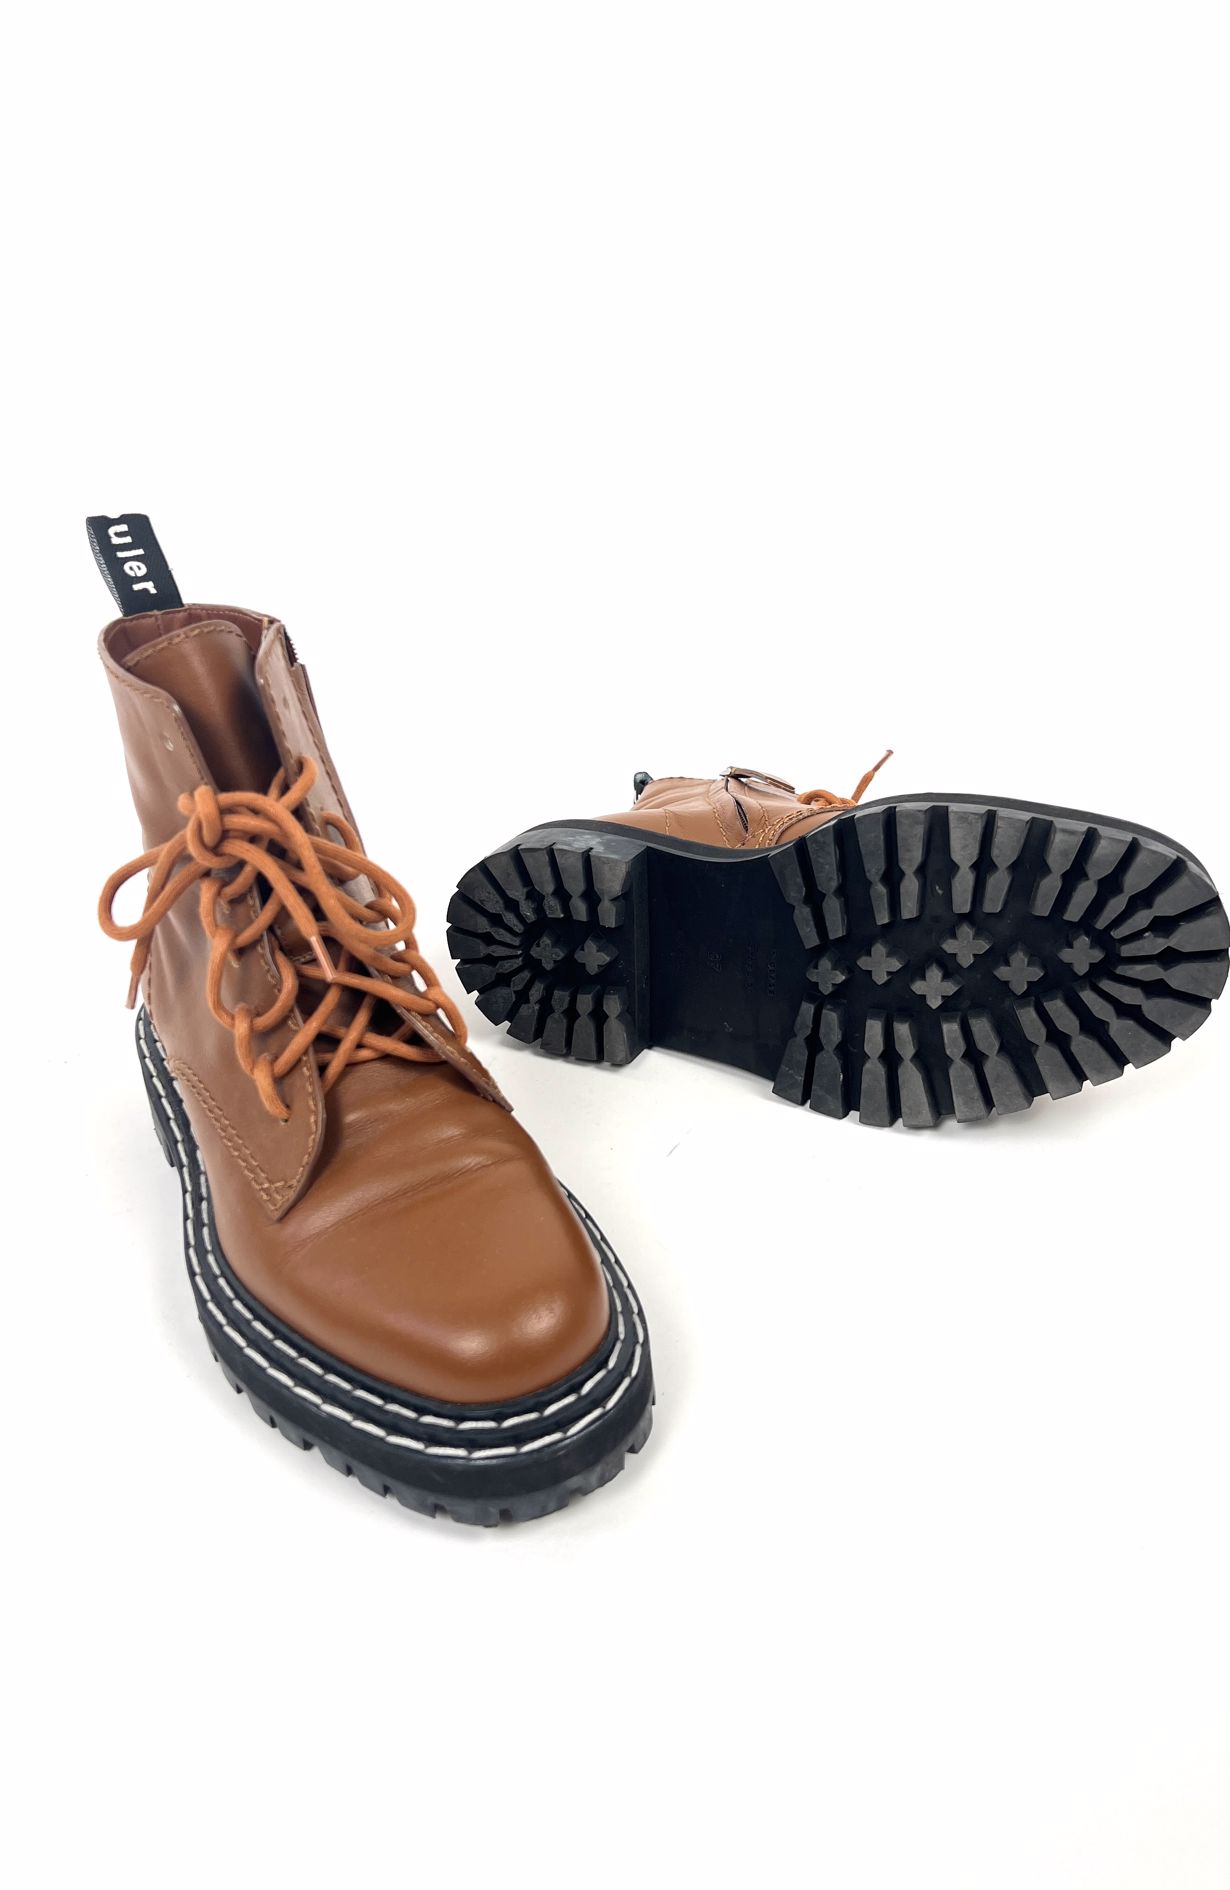 Proenza Schouler boots brown size 37